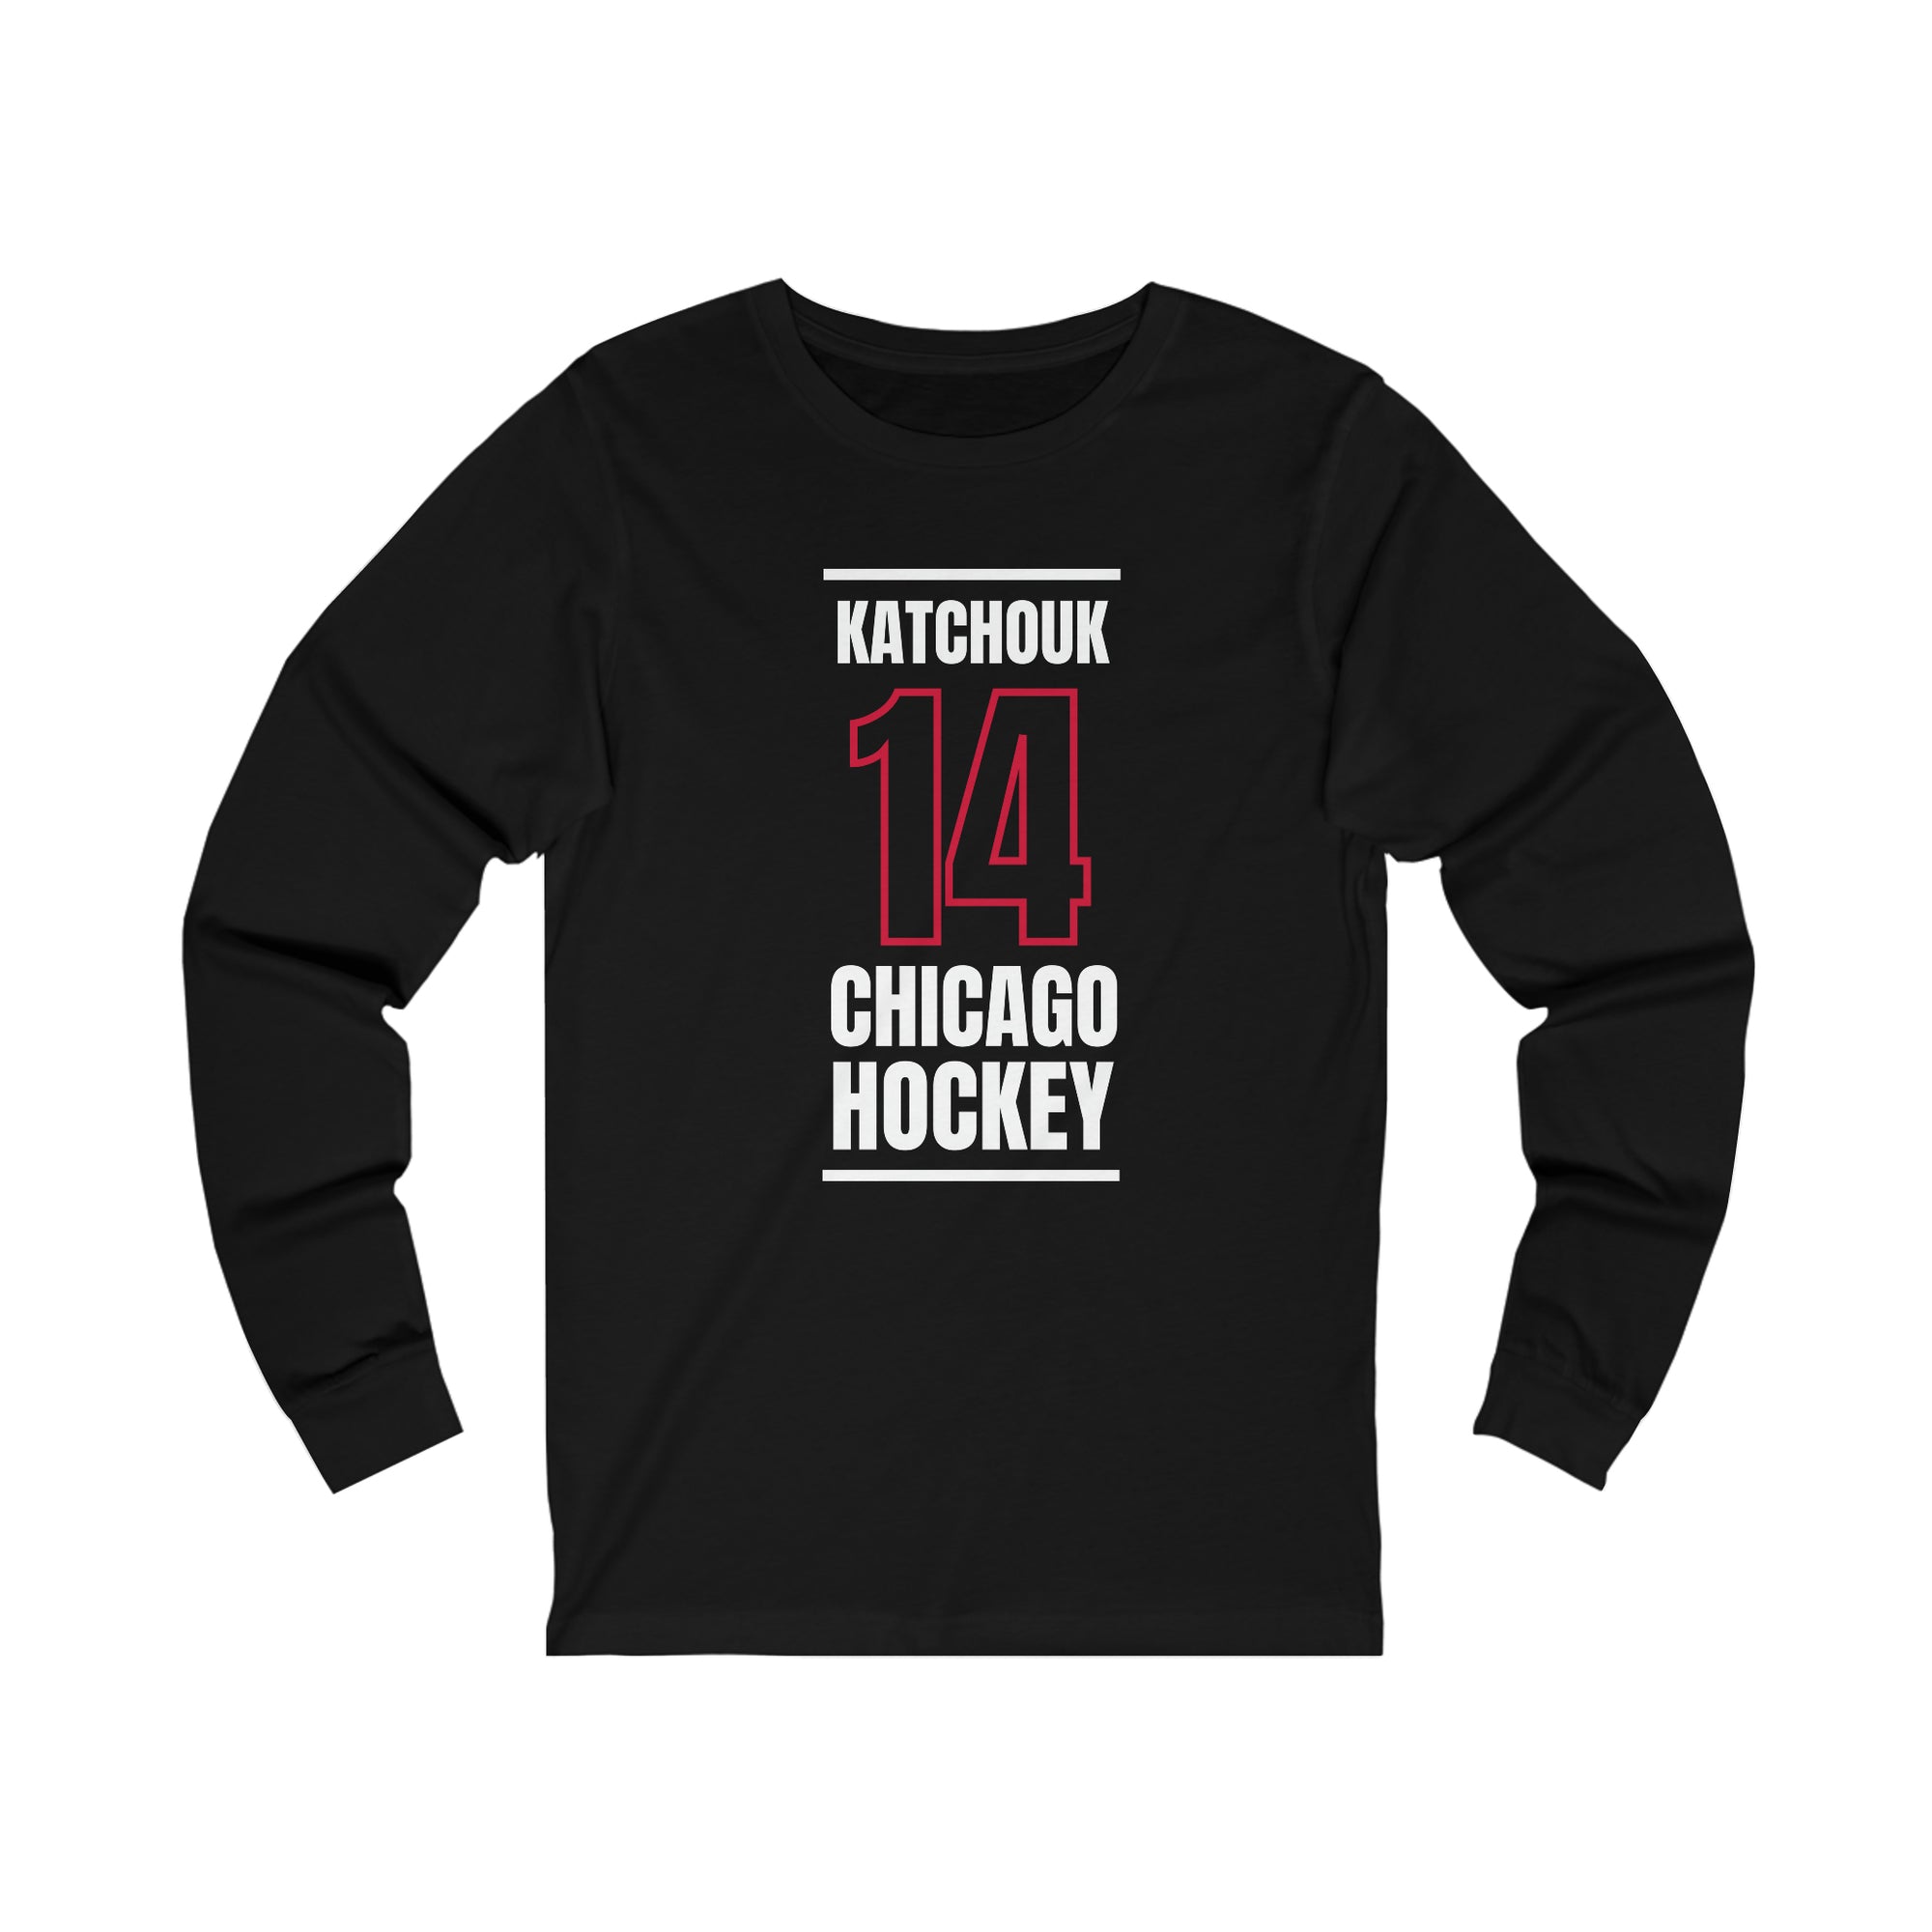 Katchouk 14 Chicago Hockey Black Vertical Design Unisex Jersey Long Sleeve Shirt